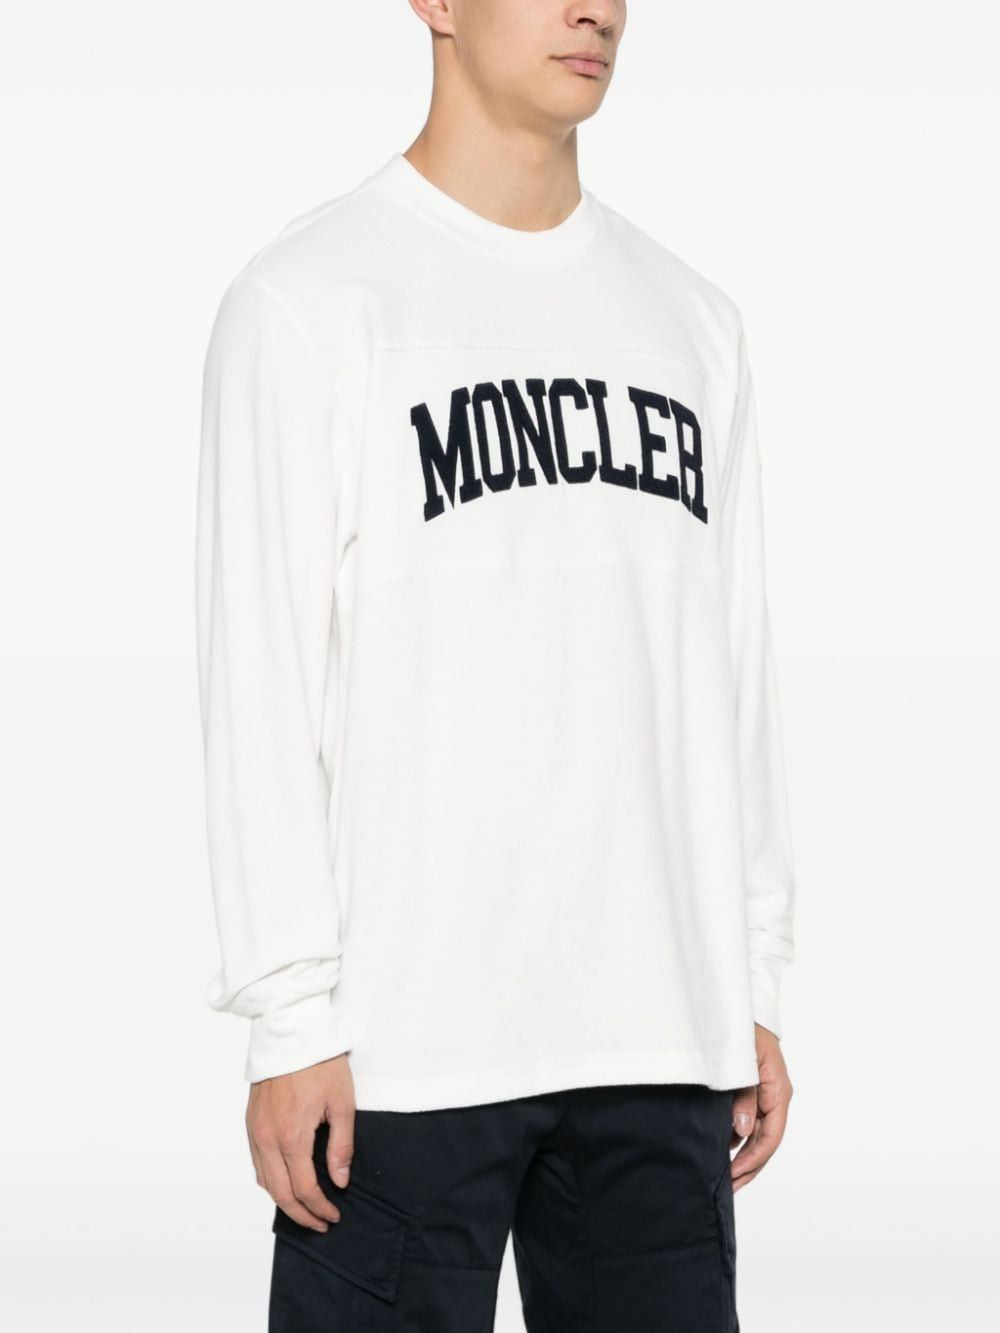 MONCLER Classic White Cotton Sweatshirt for Men - SS24 Collection